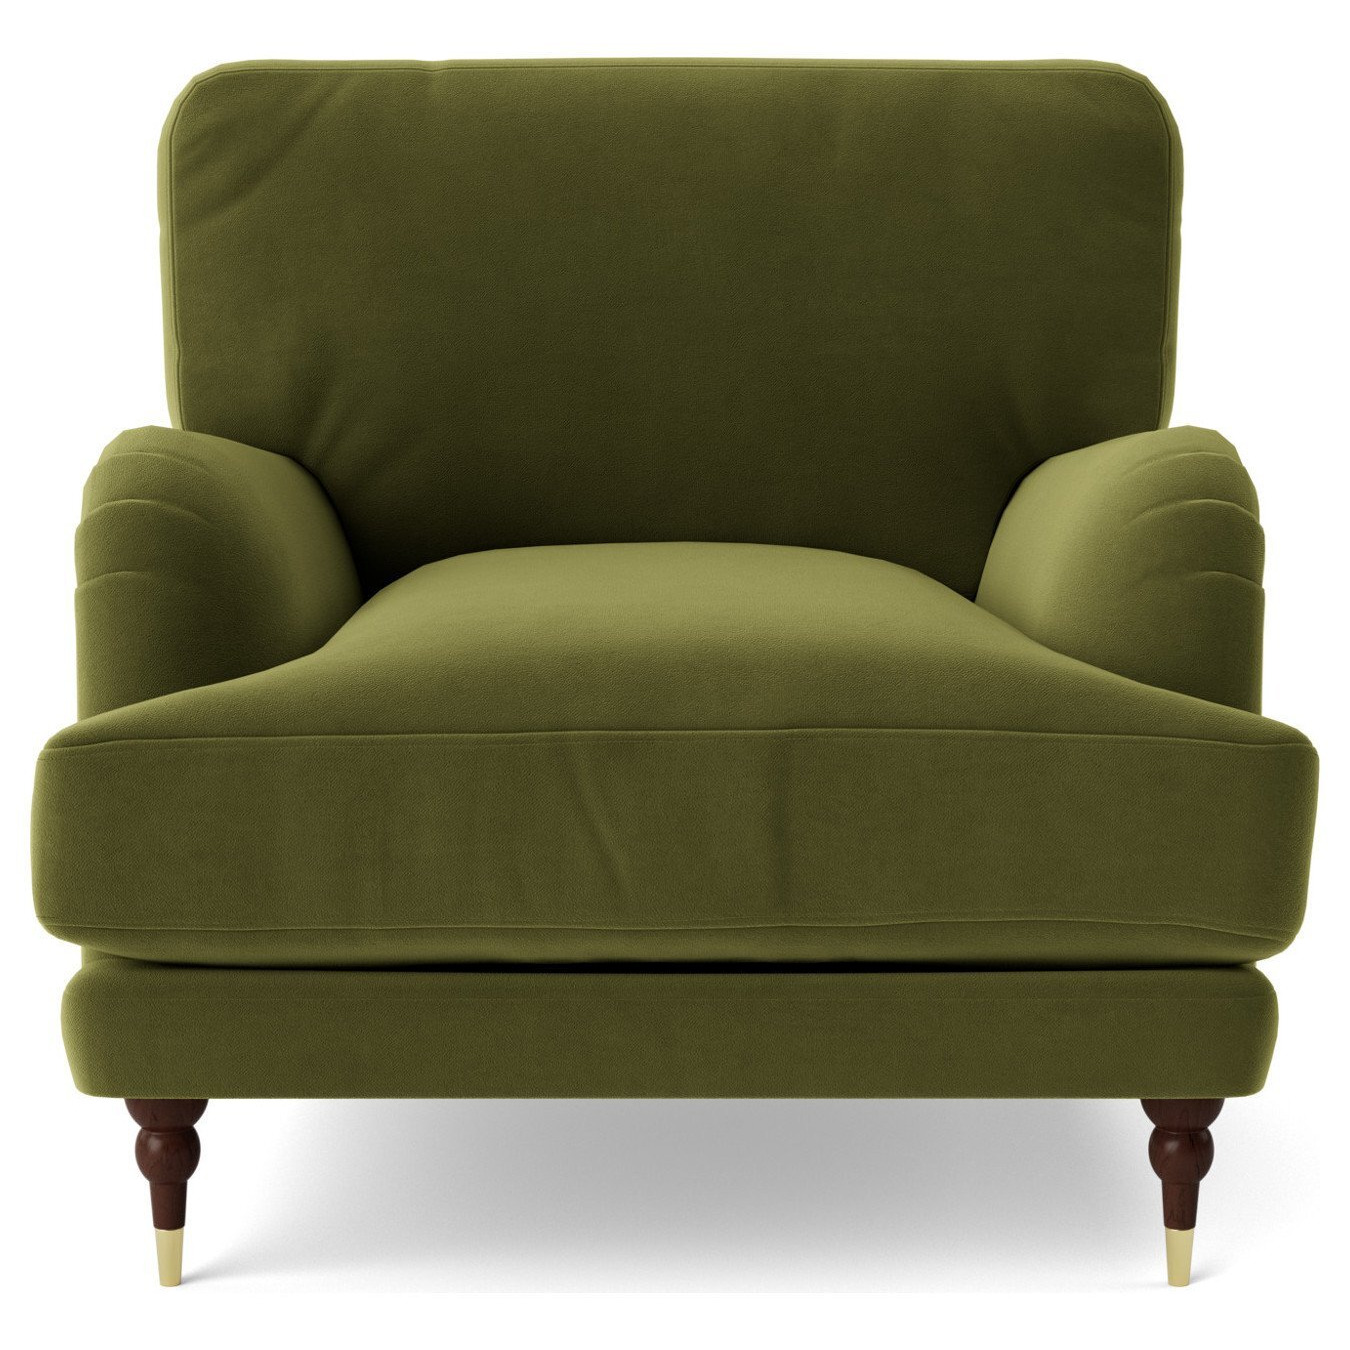 Swoon Charlbury Velvet Armchair - Fern Green - image 1